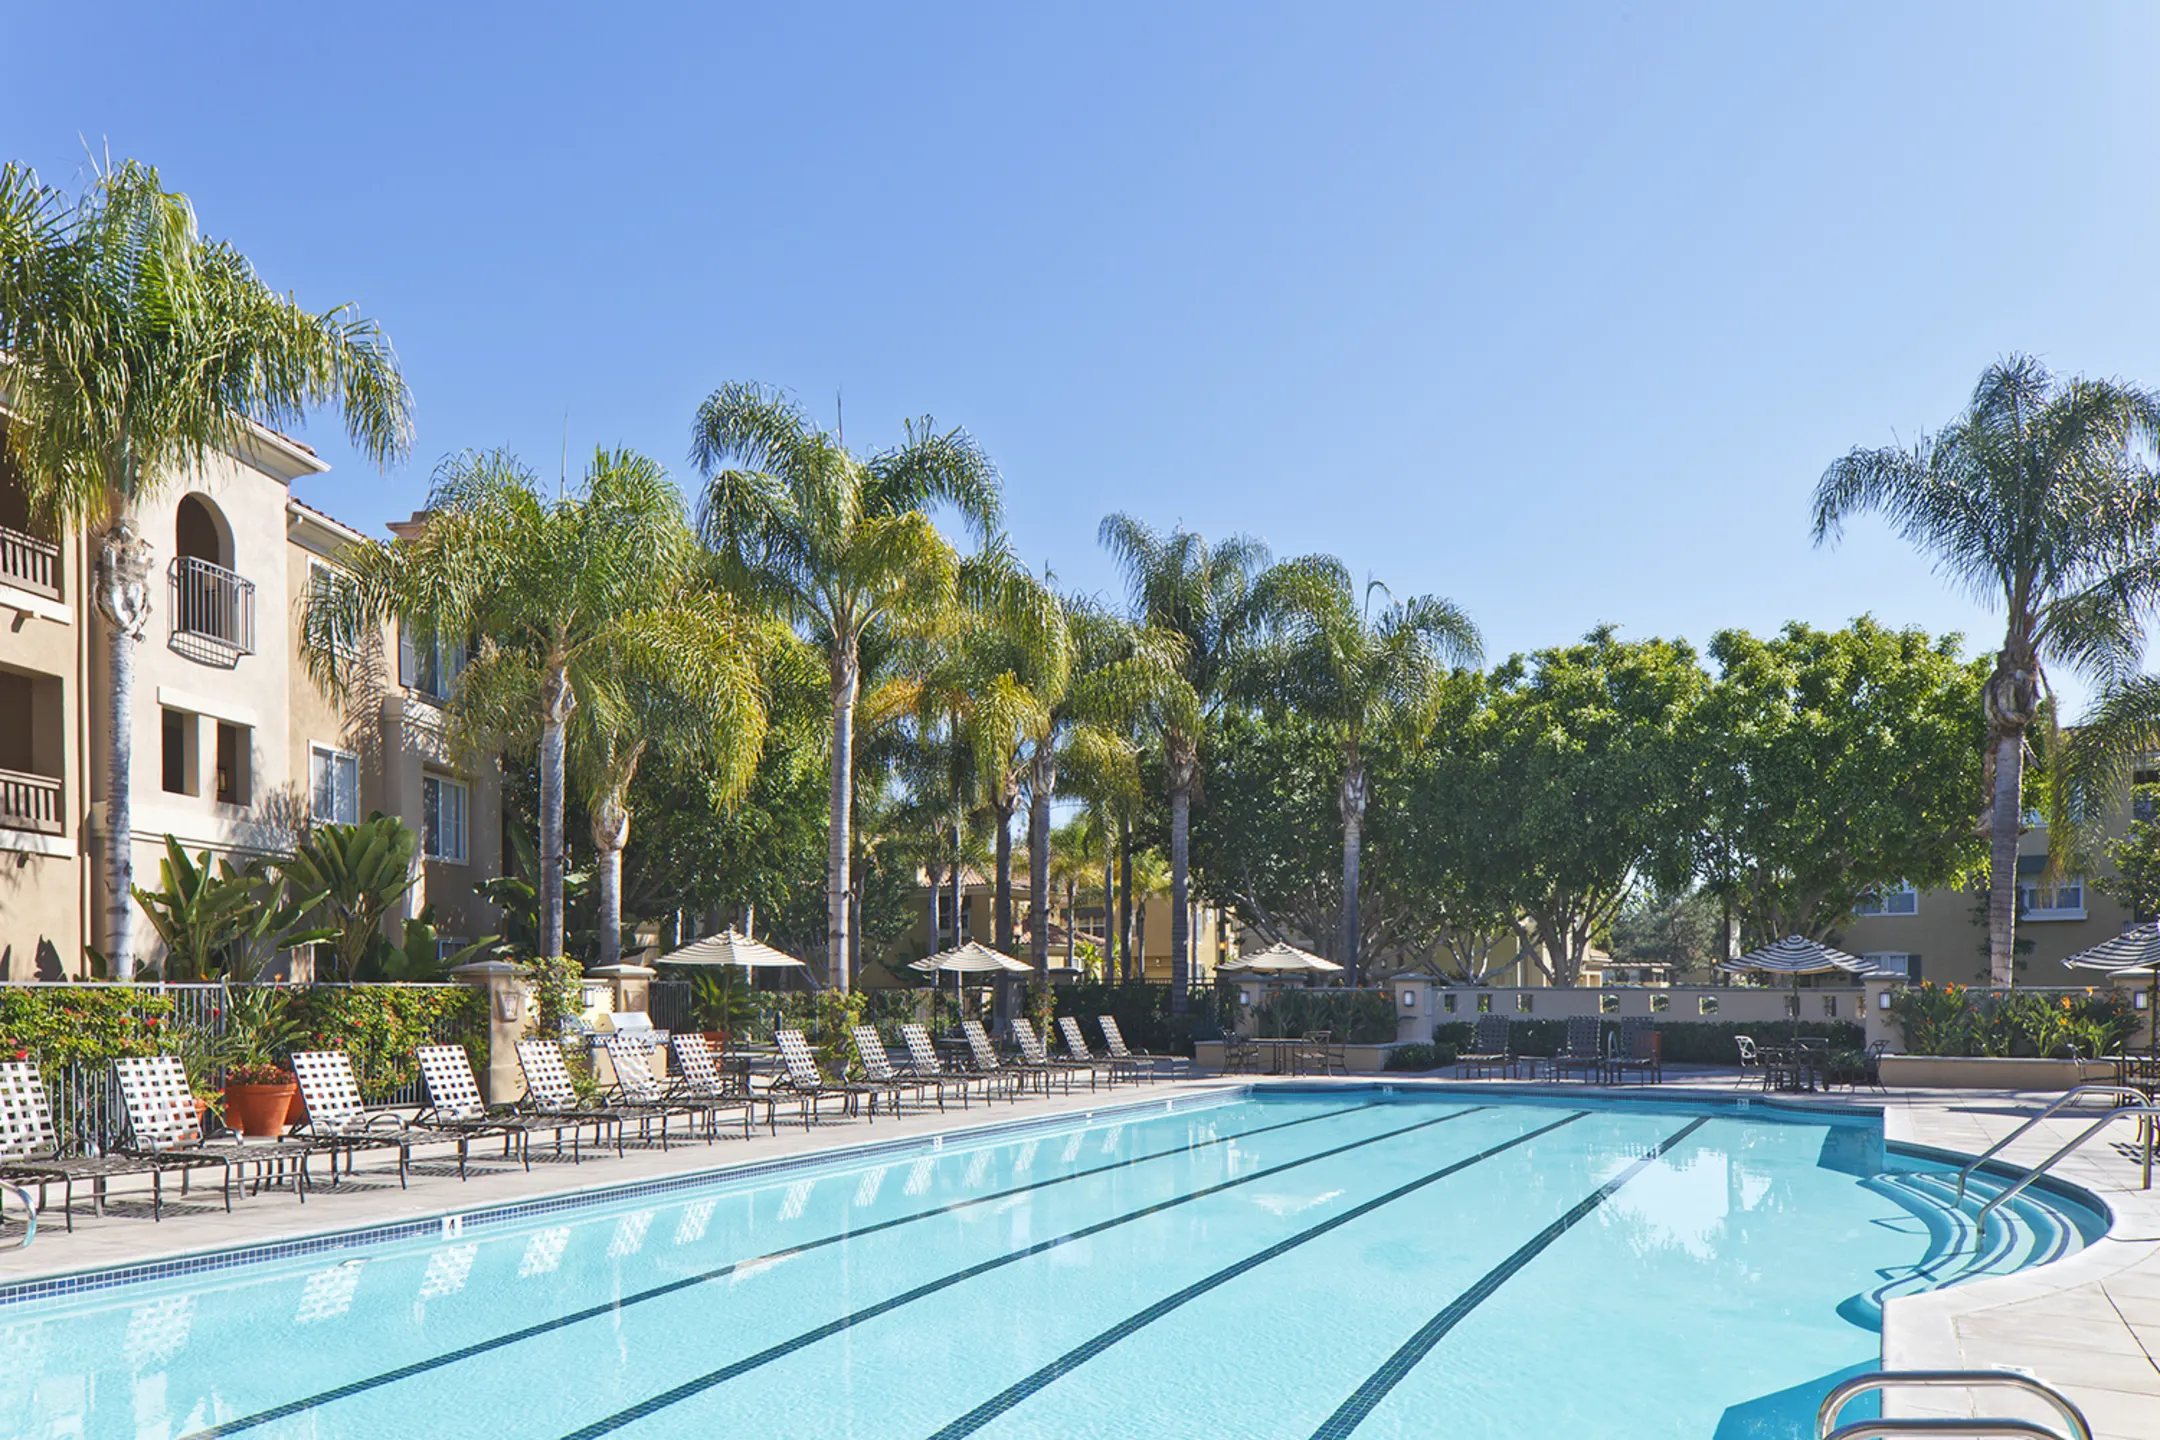 Pool - Santa Clara - Irvine, CA